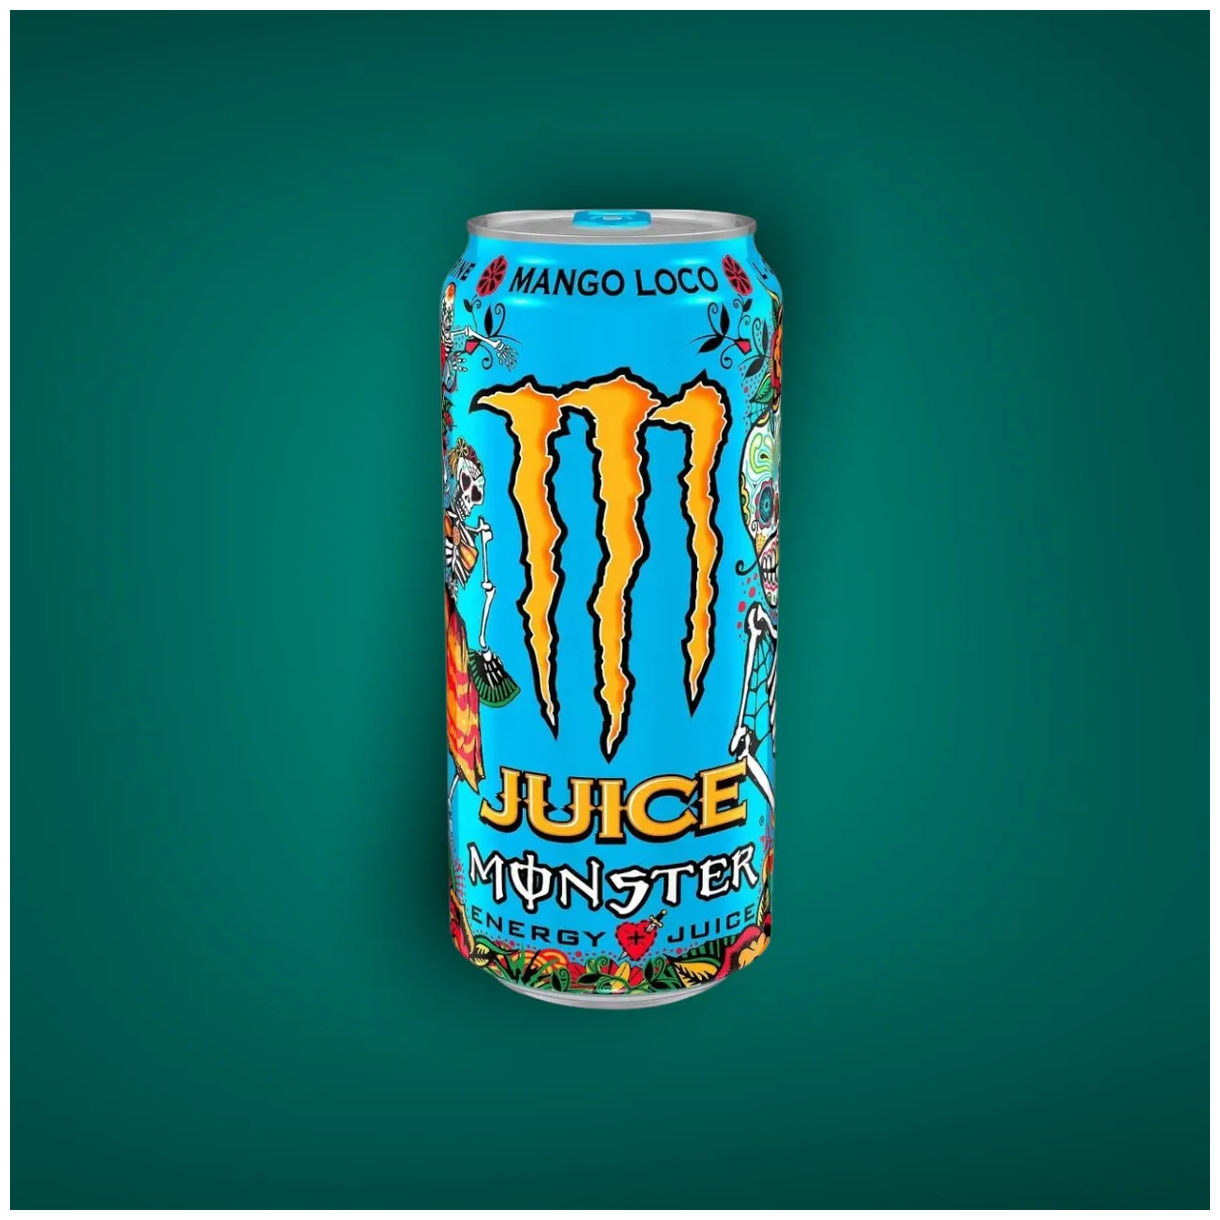 Энергетический напиток Monster Energy (Mango Loco) Монстер Энерджи, 500 мл (Манго локо)